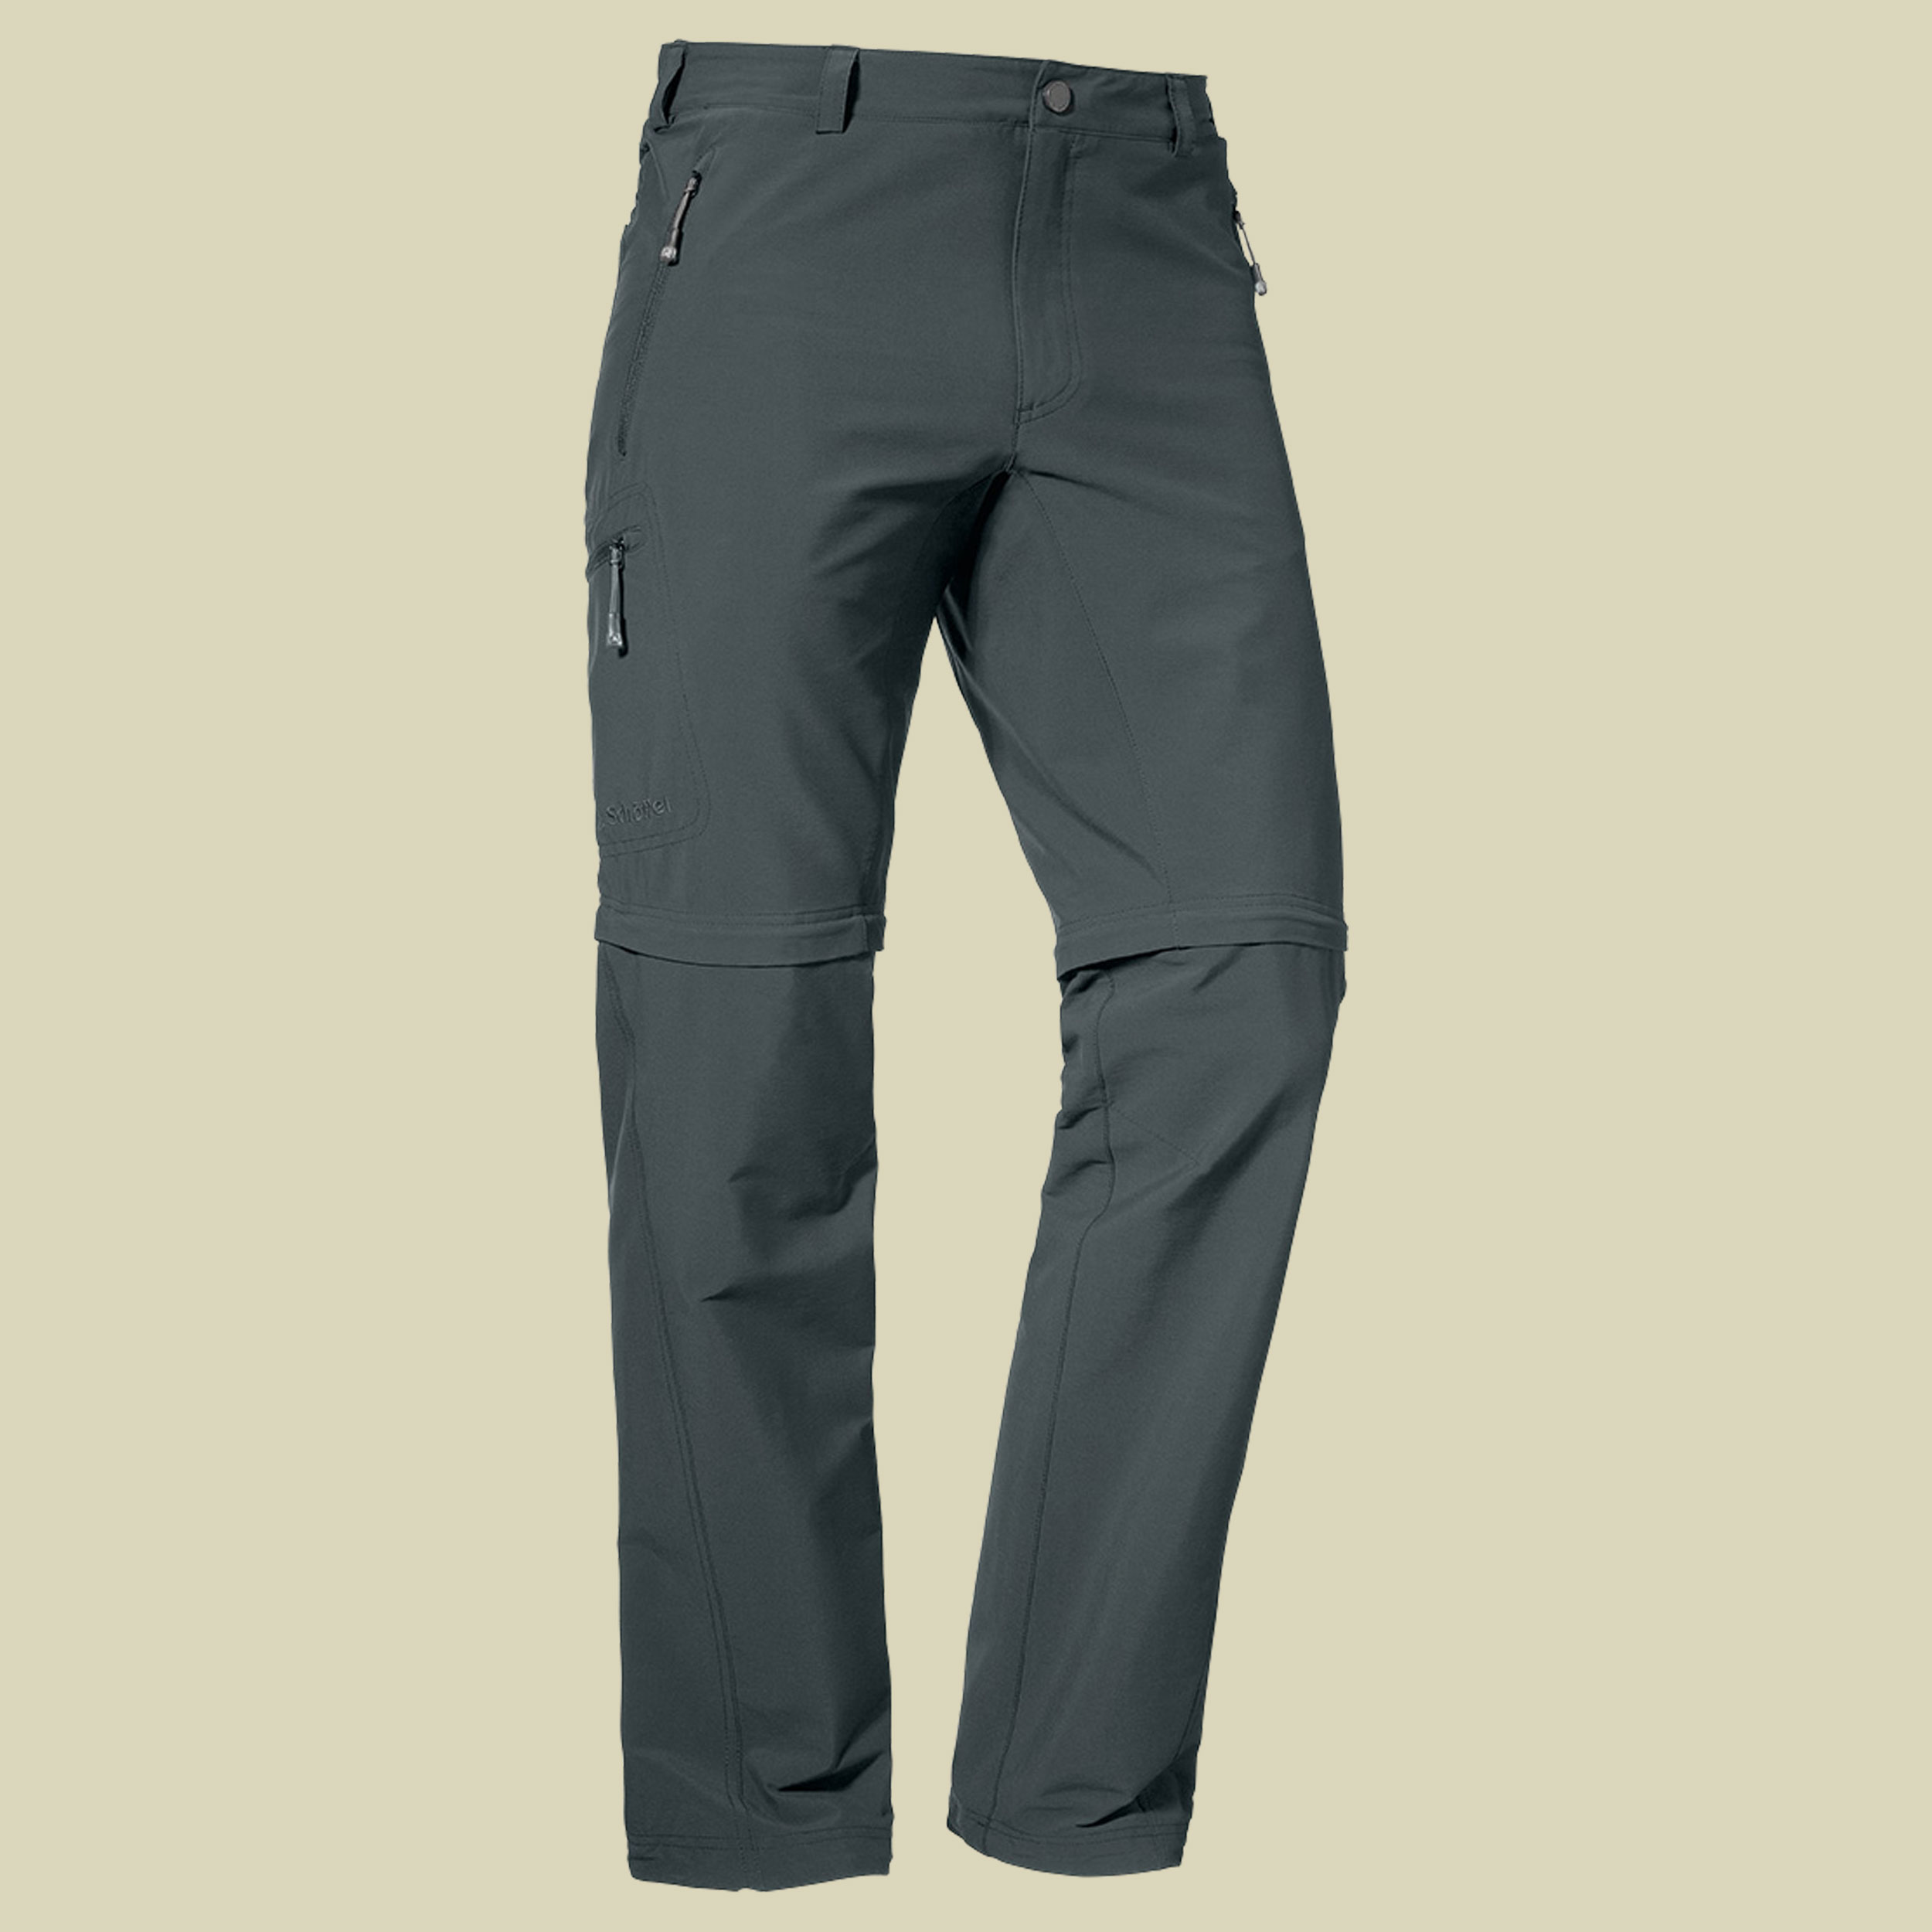 Pants Koper Zip Off Men Größe 28 Farbe charcoal